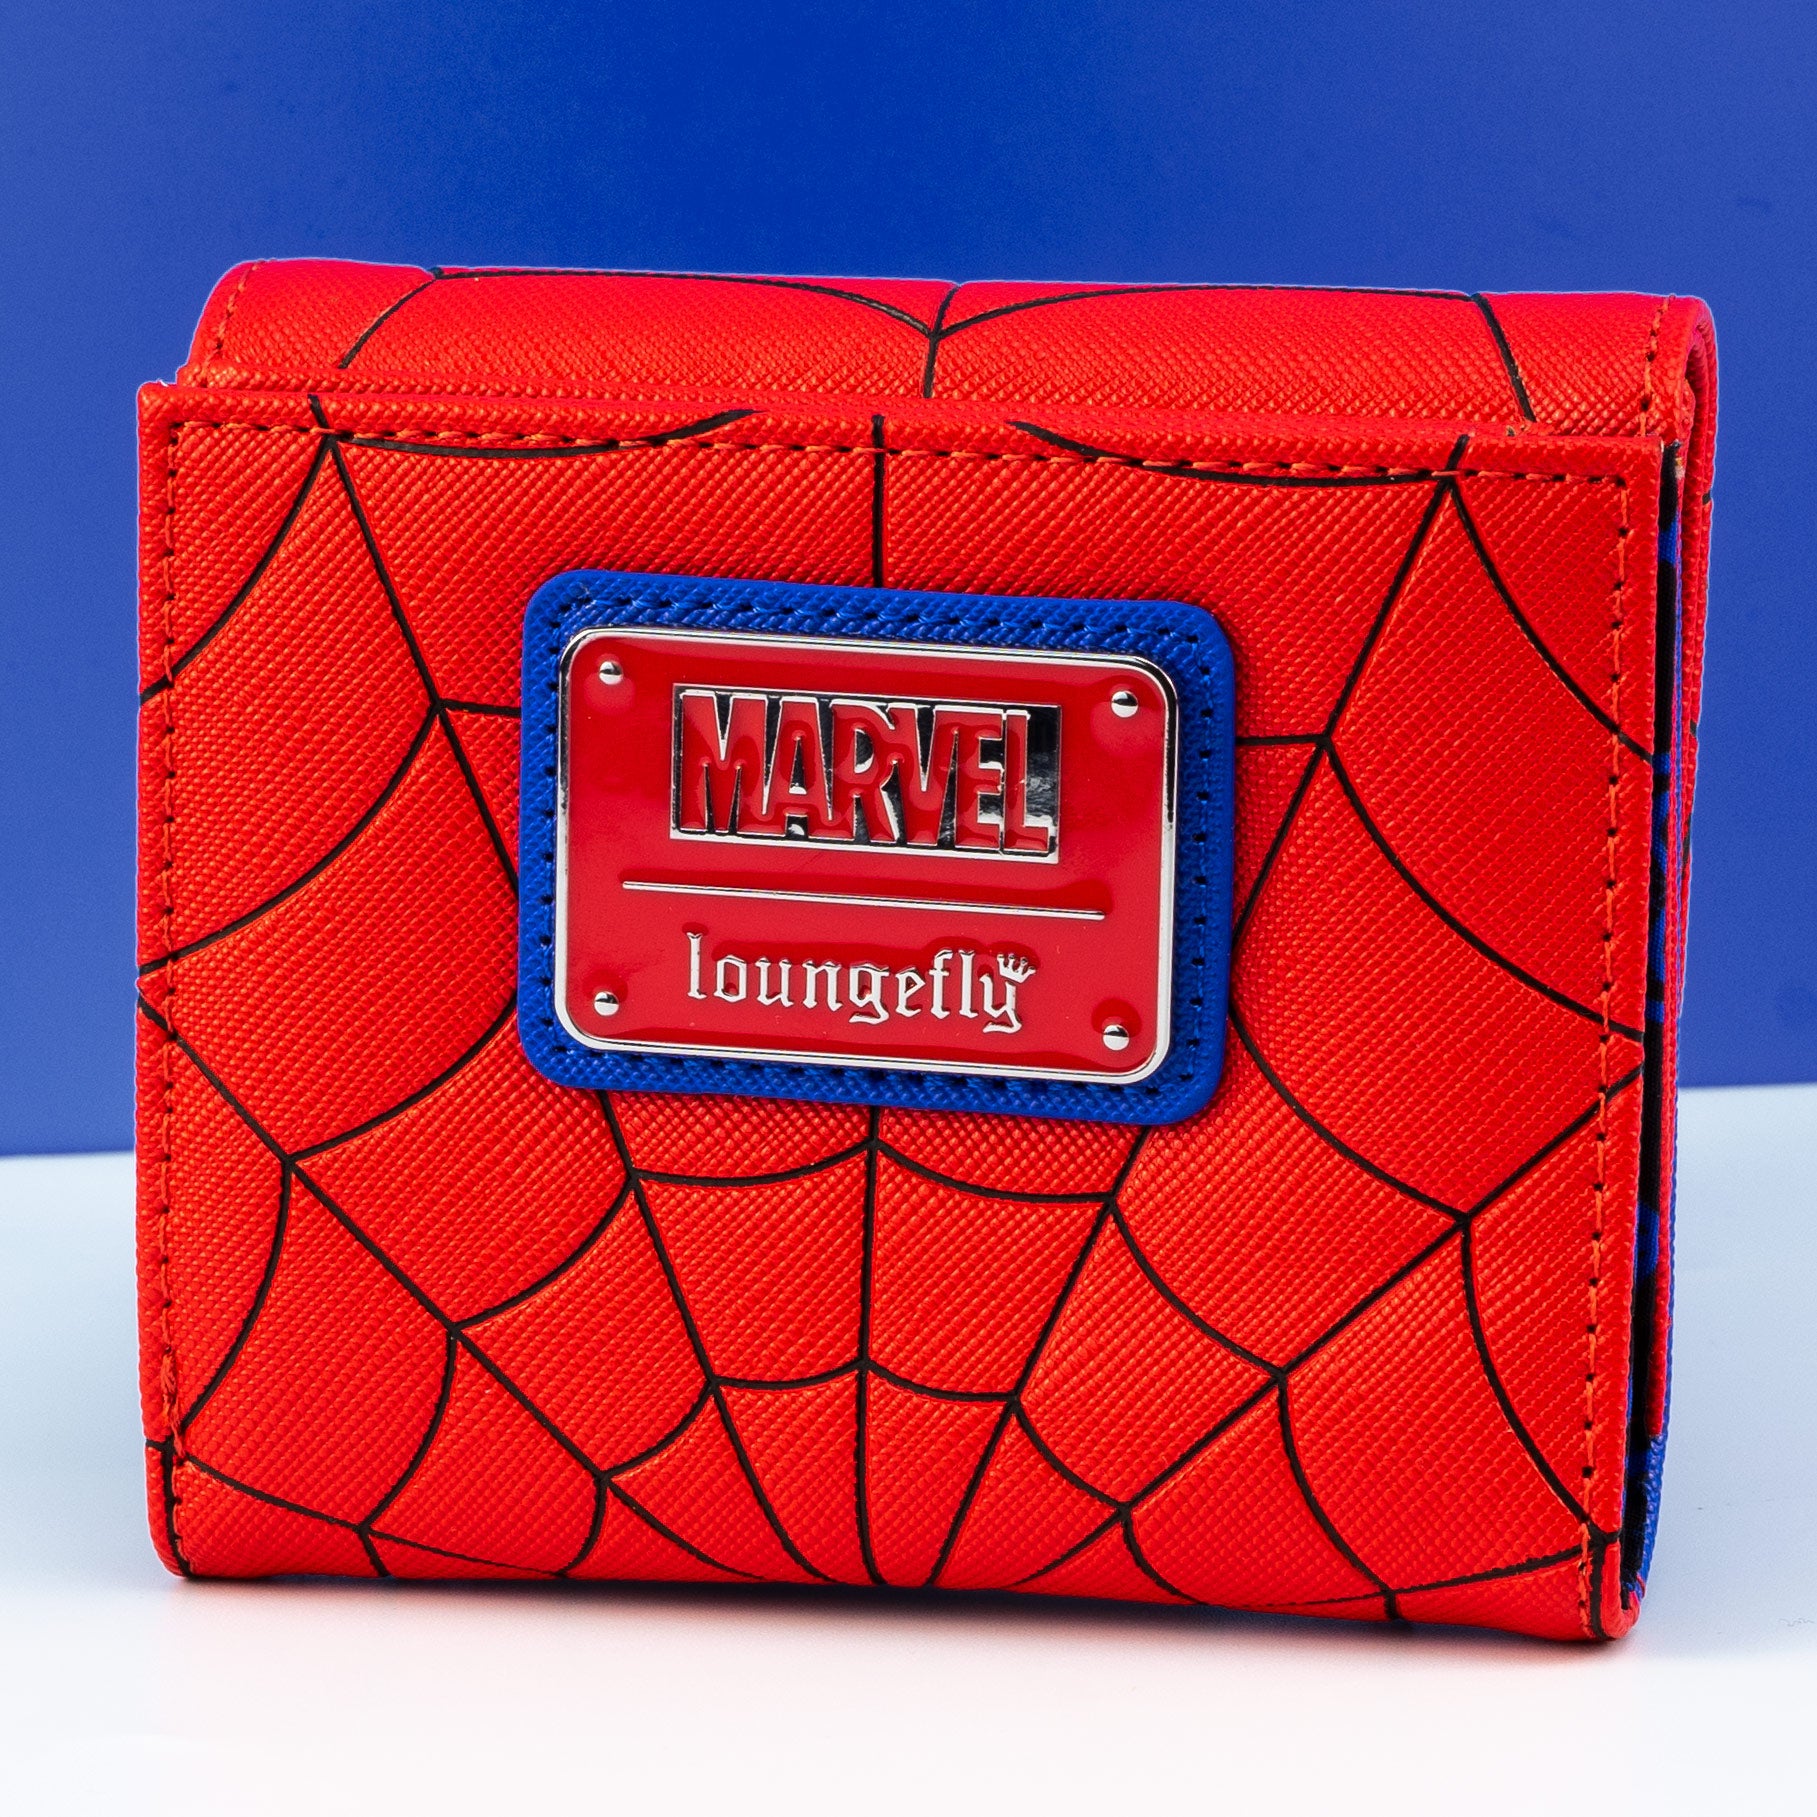 Loungefly x Marvel Spider-man Cosplay Purse